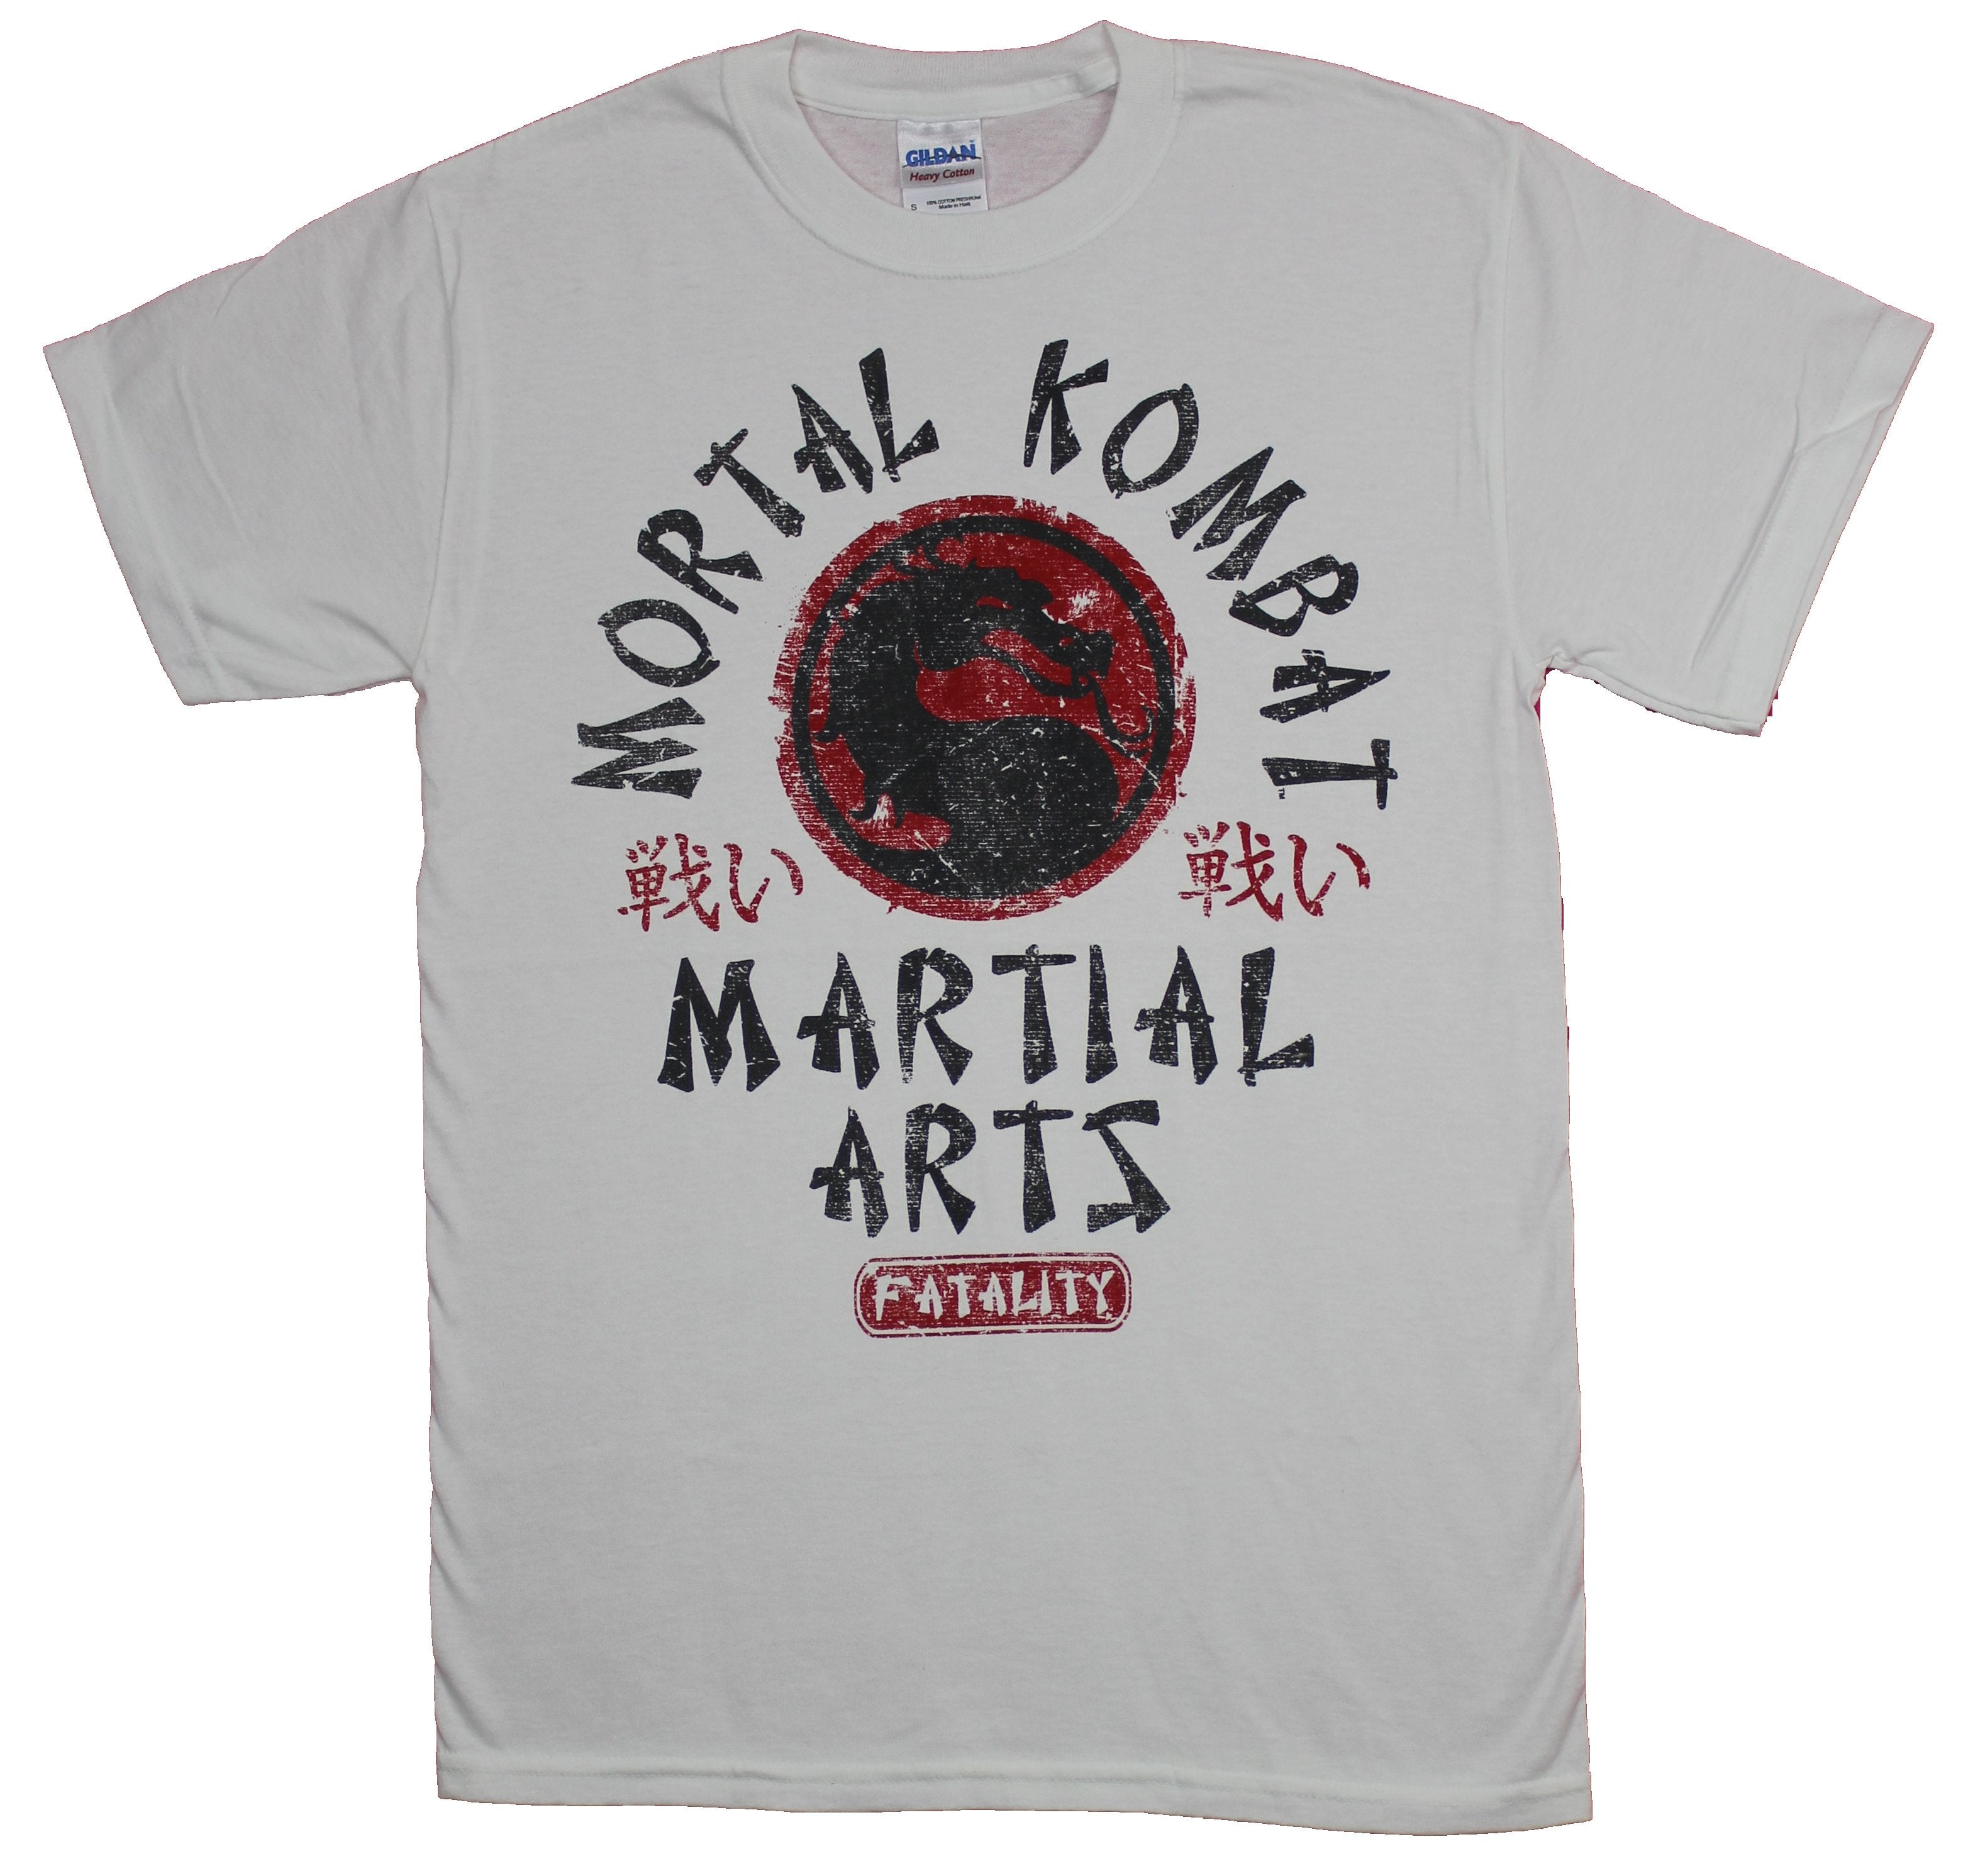 Mortal Kombat Mens T-Shirt - Distressed Martial Arts Fatality Logo Image (Large)